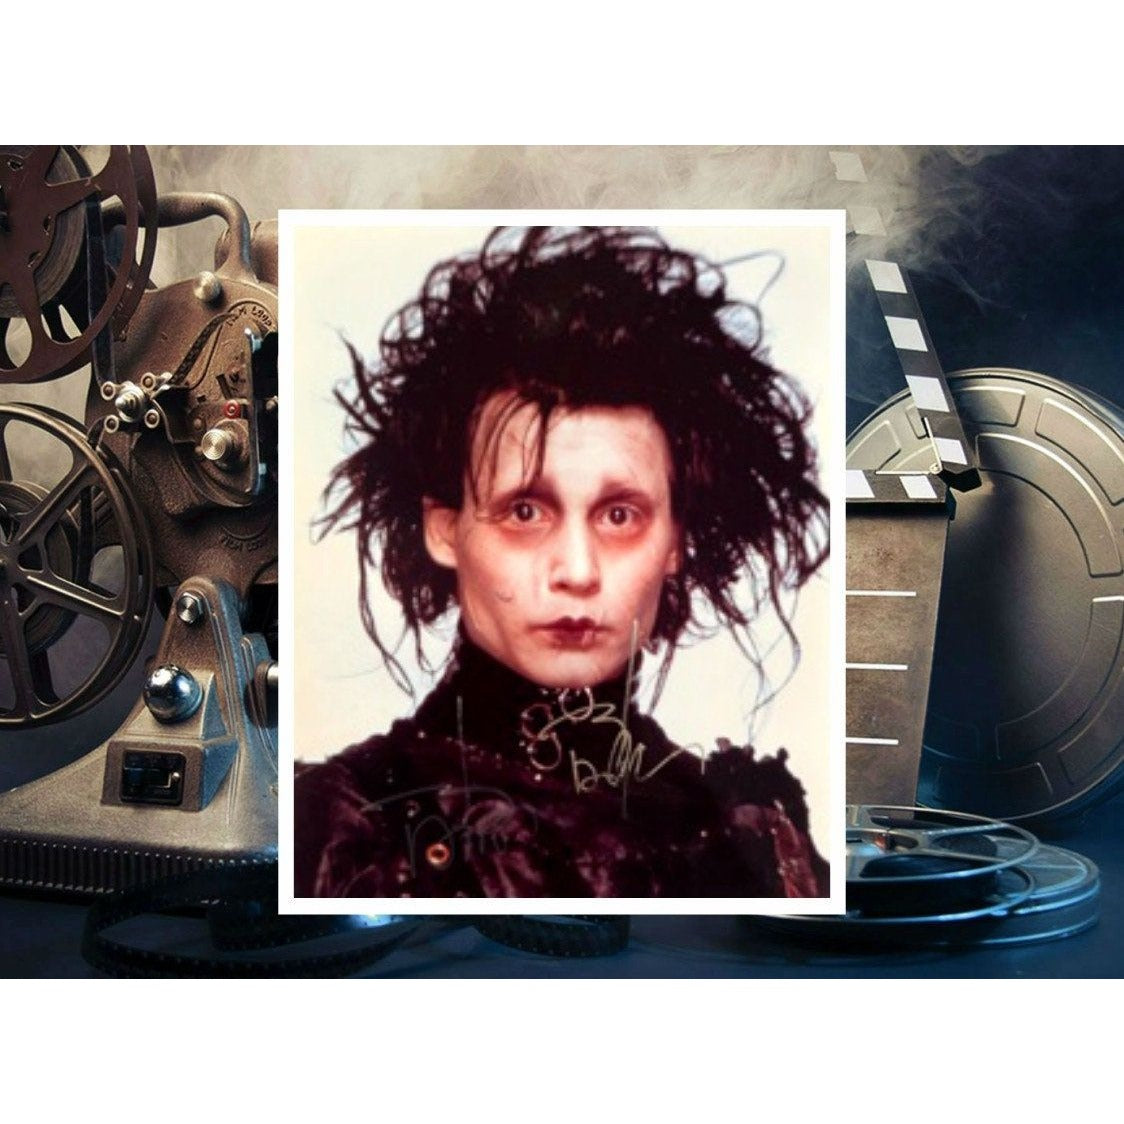 Johnny Depp Edward Scissorhands 8x10 signed photo with proof